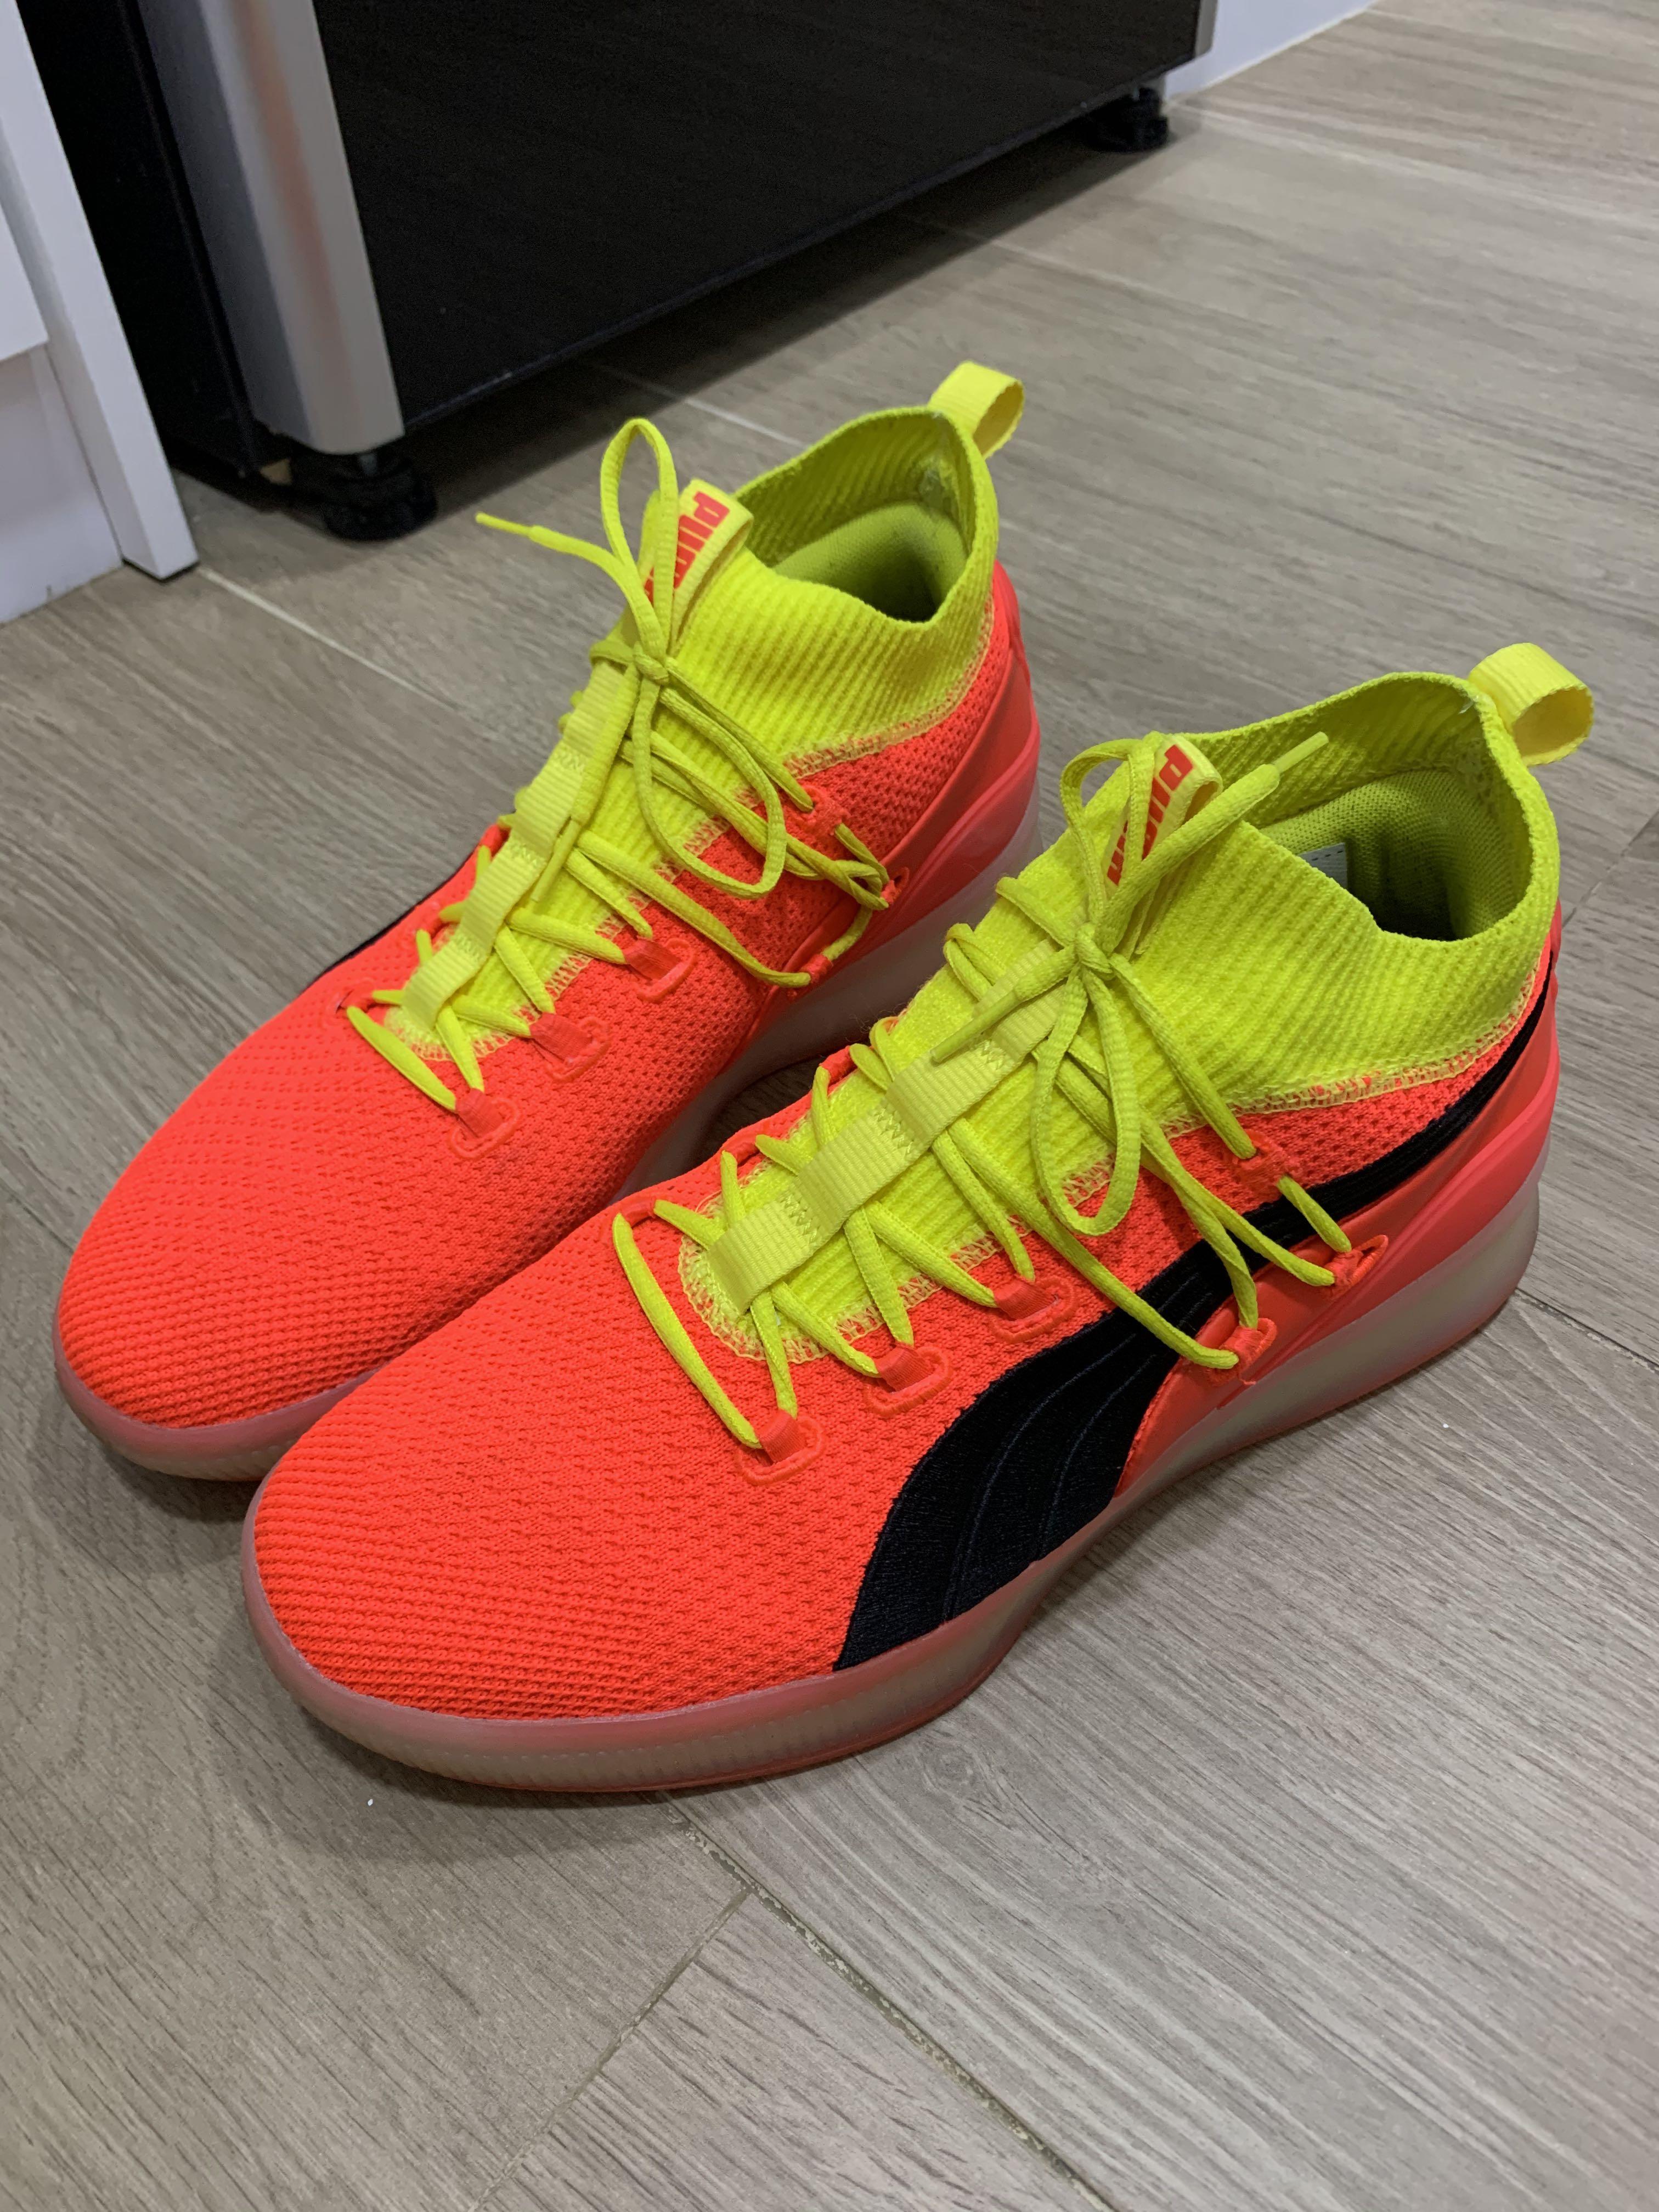 puma basketball shoes 2018 price